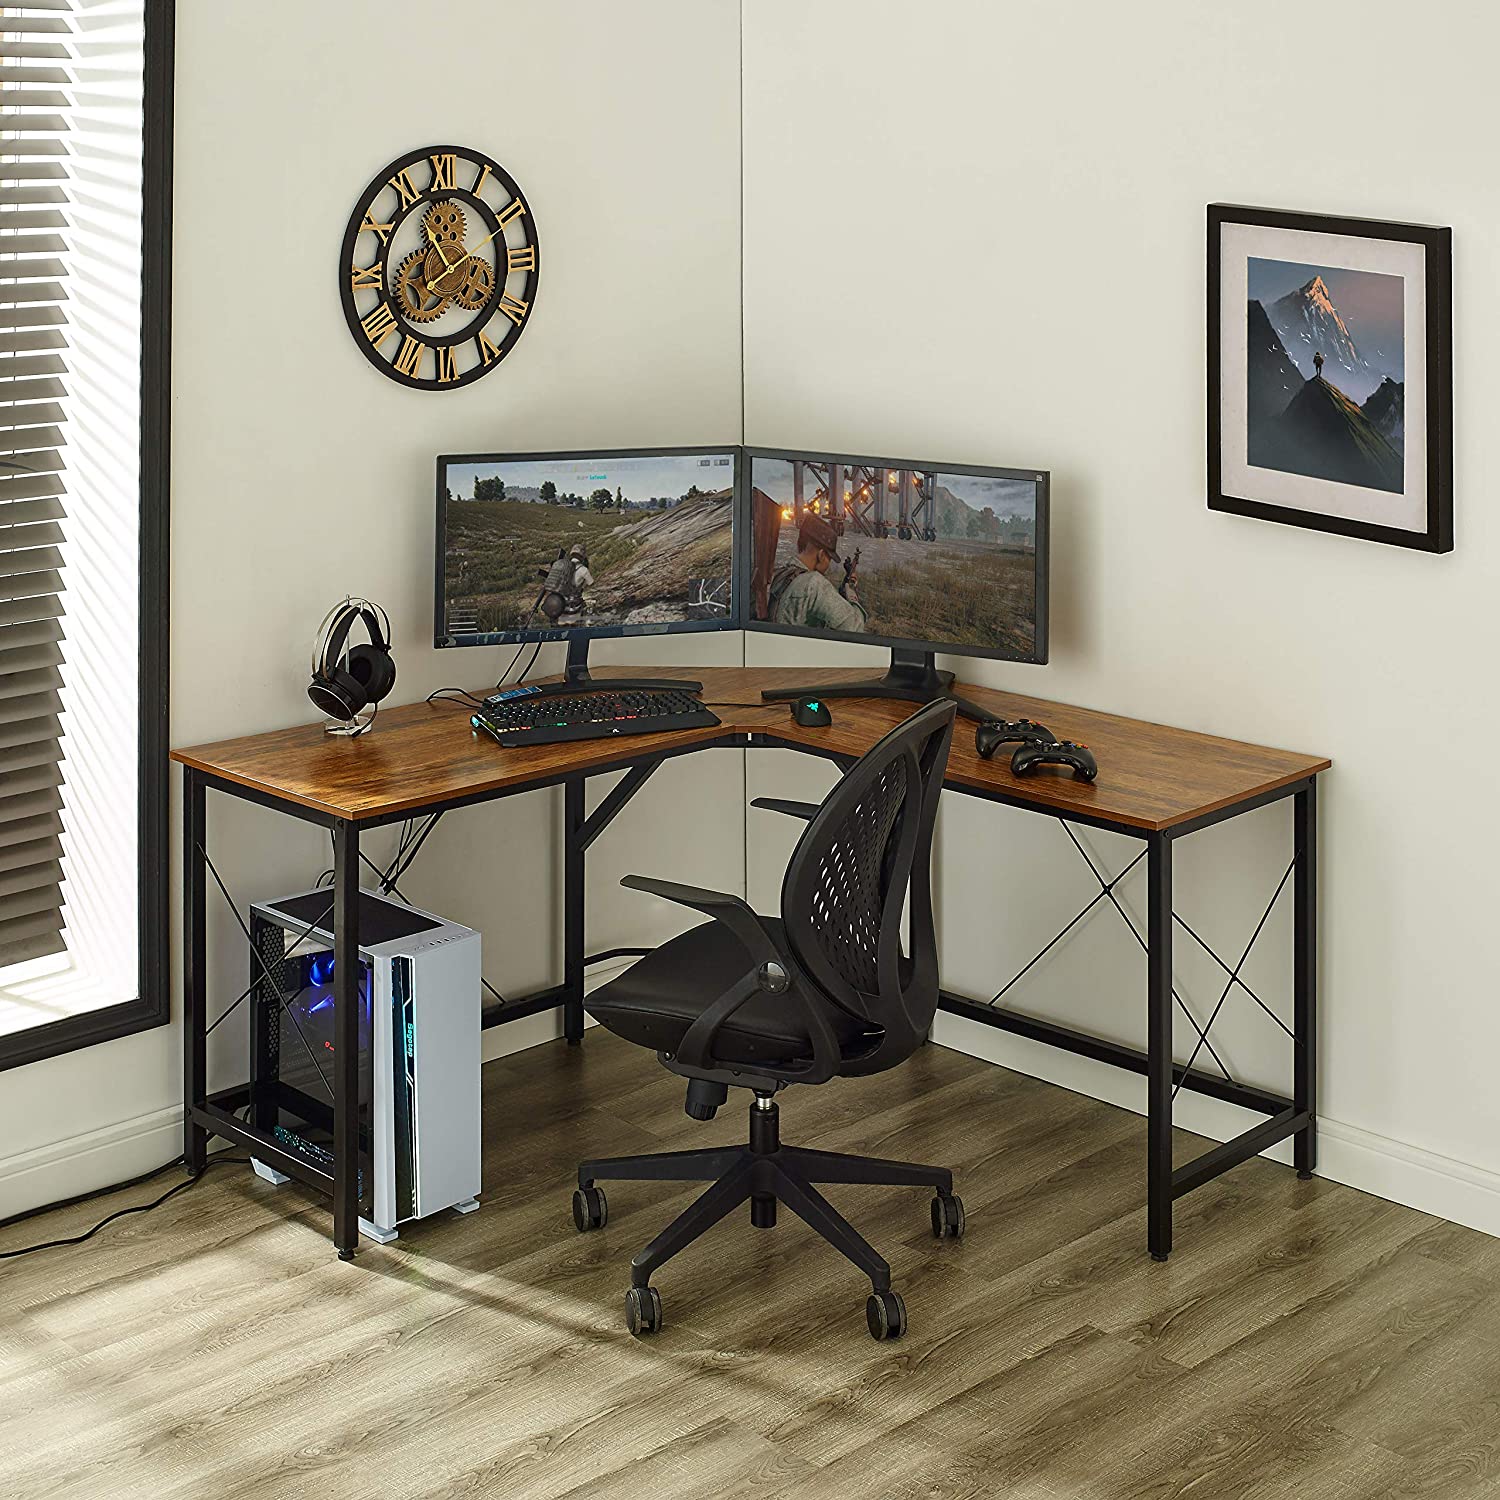 Mr IRONSTONE L-Shaped Desk 59" Computer Corner Desk, Home Gaming Desk, Office Writing Workstation, Space-Saving, Easy to Assemble (Vintage) - image 4 of 7